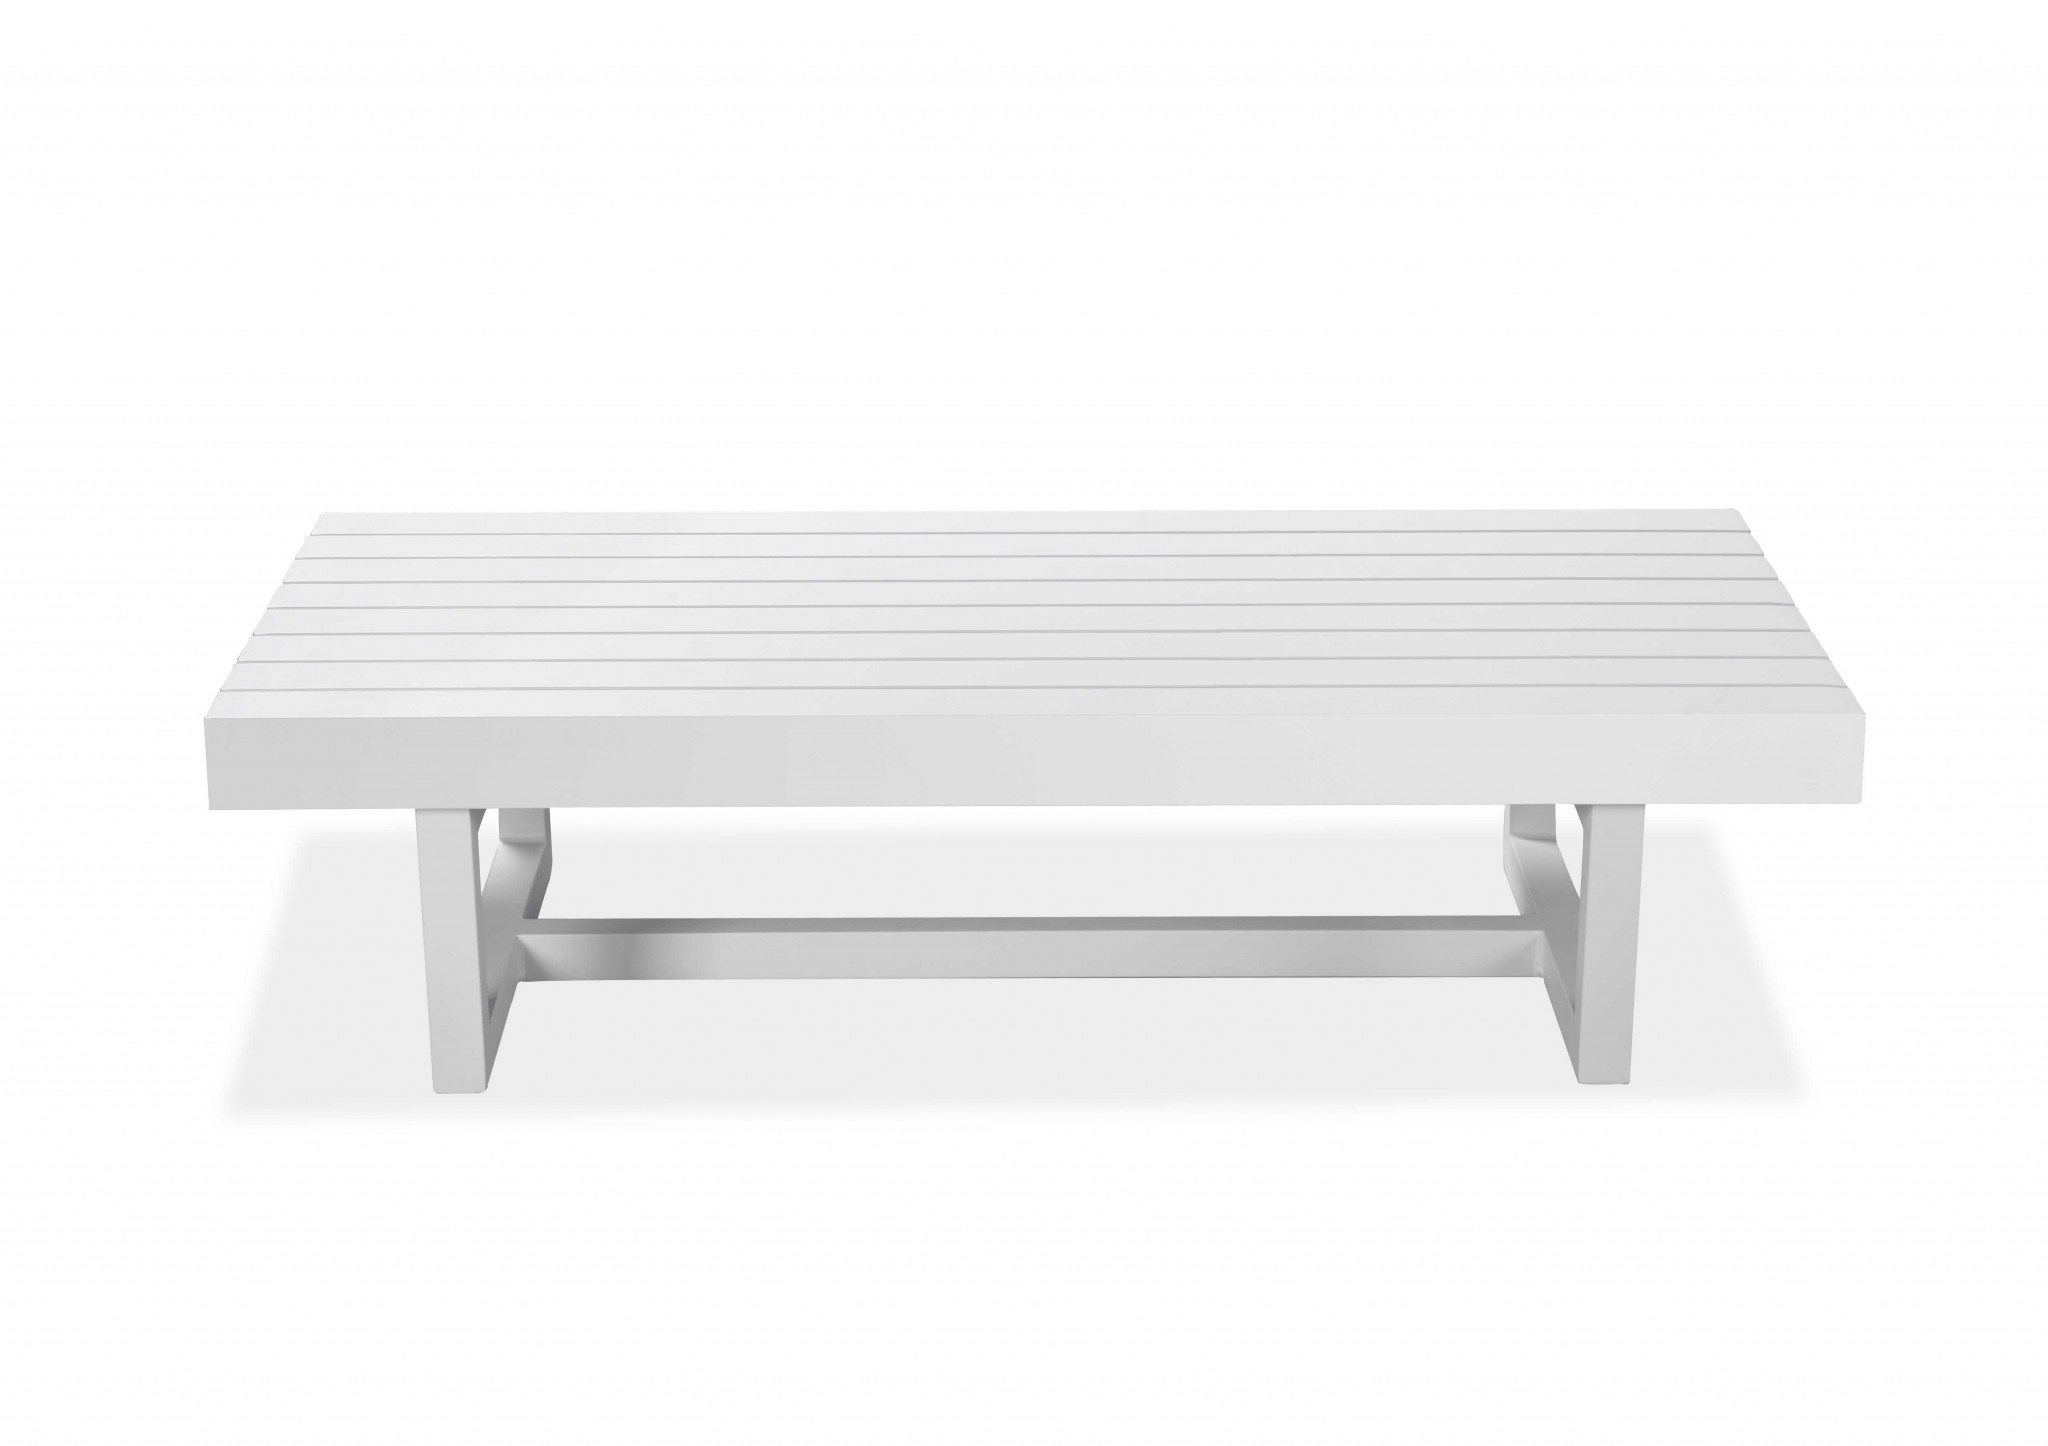 47" X 24" X 12" Rectangular White Aluminum Coffee Table